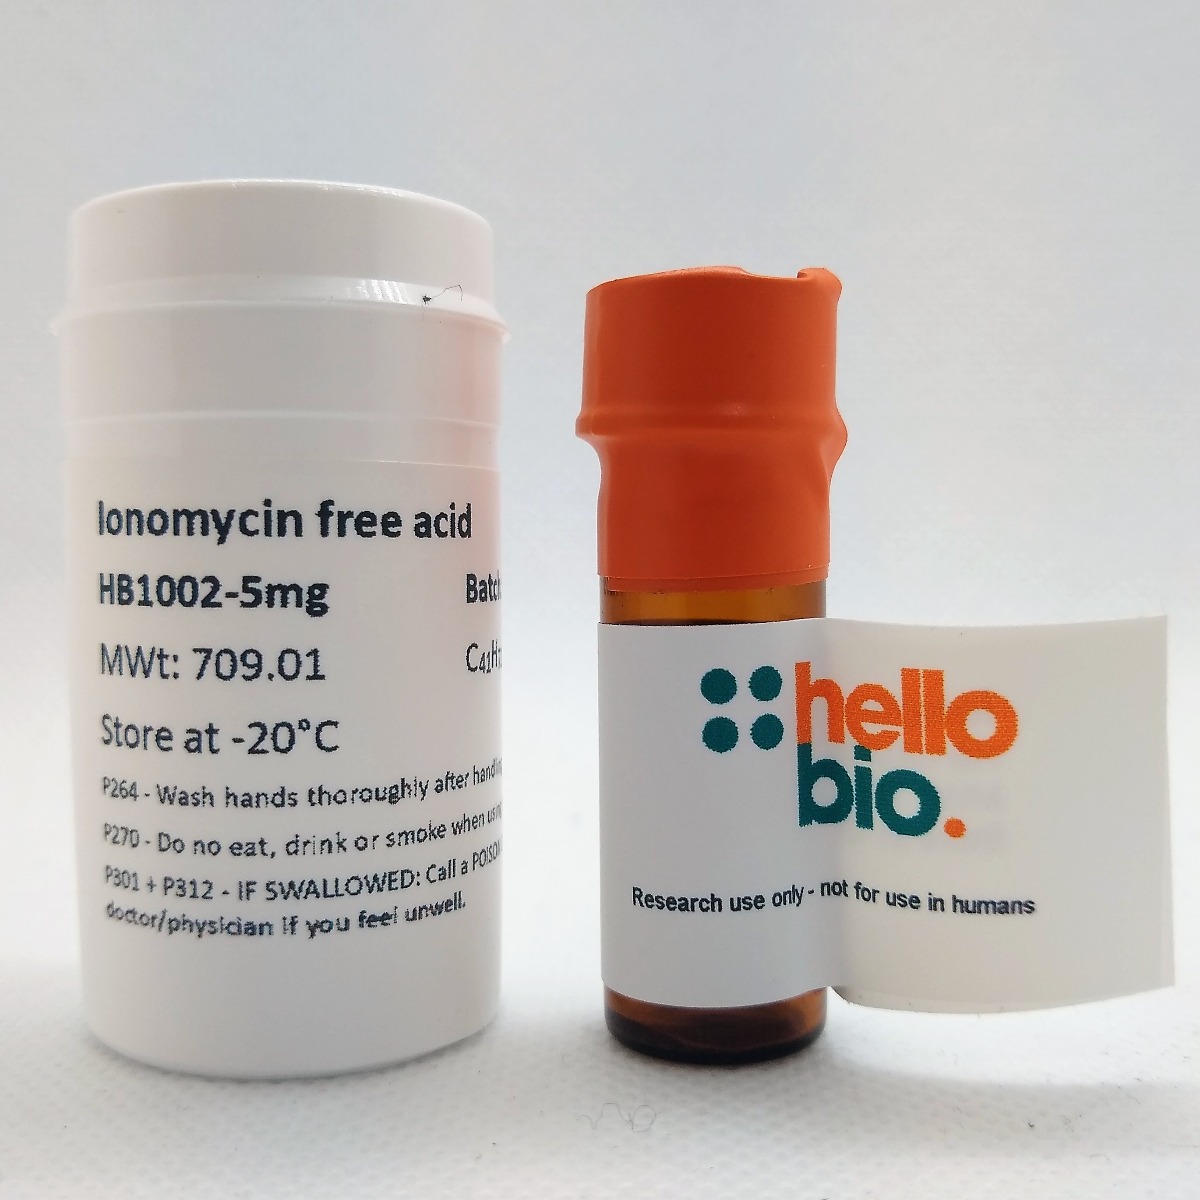 Ionomycin free acid product vial image | Hello Bio